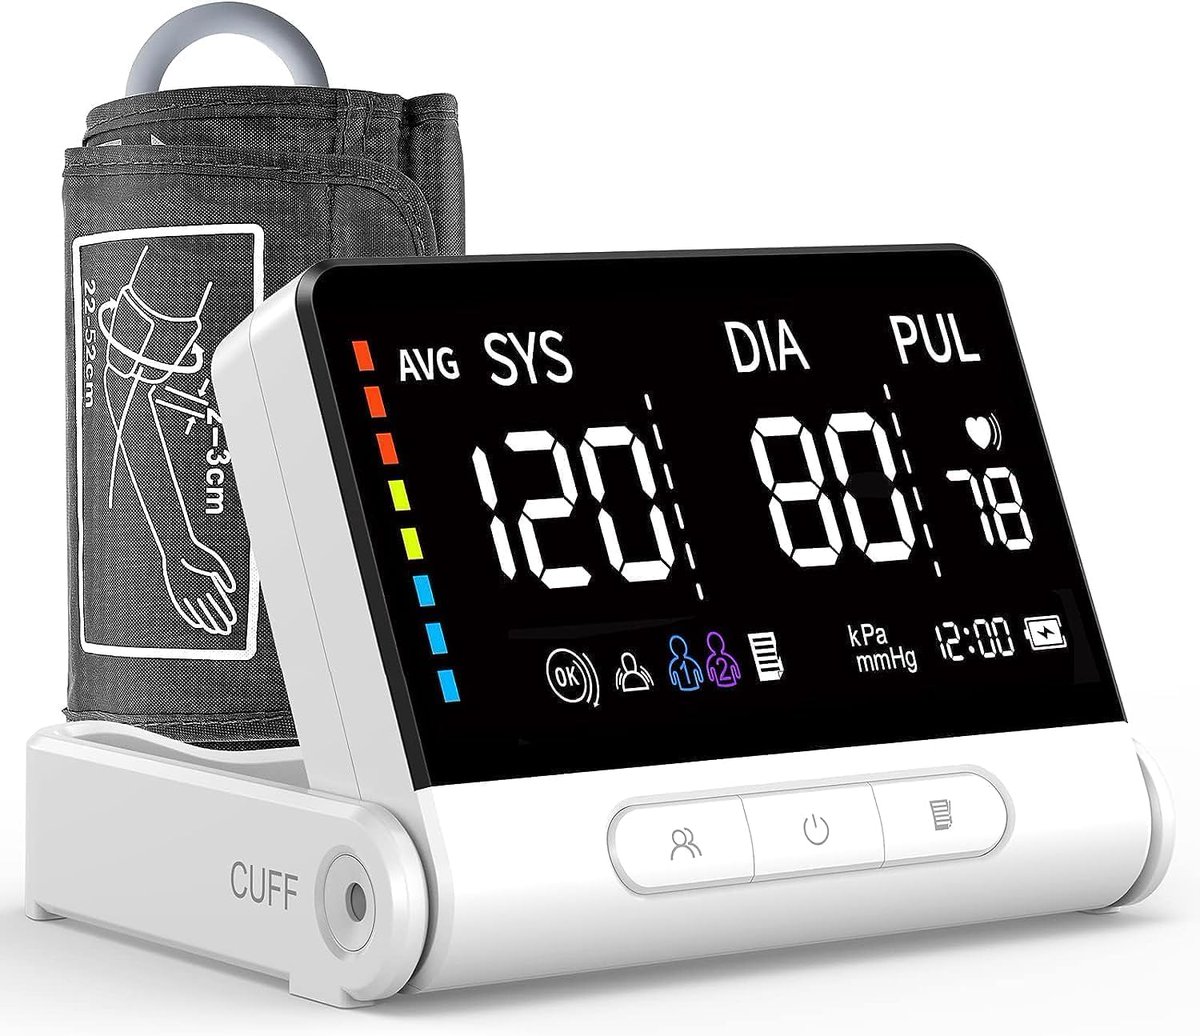 🩺 Keep Your Health in Check: Blood Pressure Monitors Now $22.49 (Orig. $44.98)

💰 Deal Price: $22.49  
💸 Regular Price: $44.98  
📎 Use code 50X4XYRX  
🔗 urlgeni.us/amzn/RJ3c  

#BloodPressureMonitor #Healthcare #DiscountCode #HealthEssentials